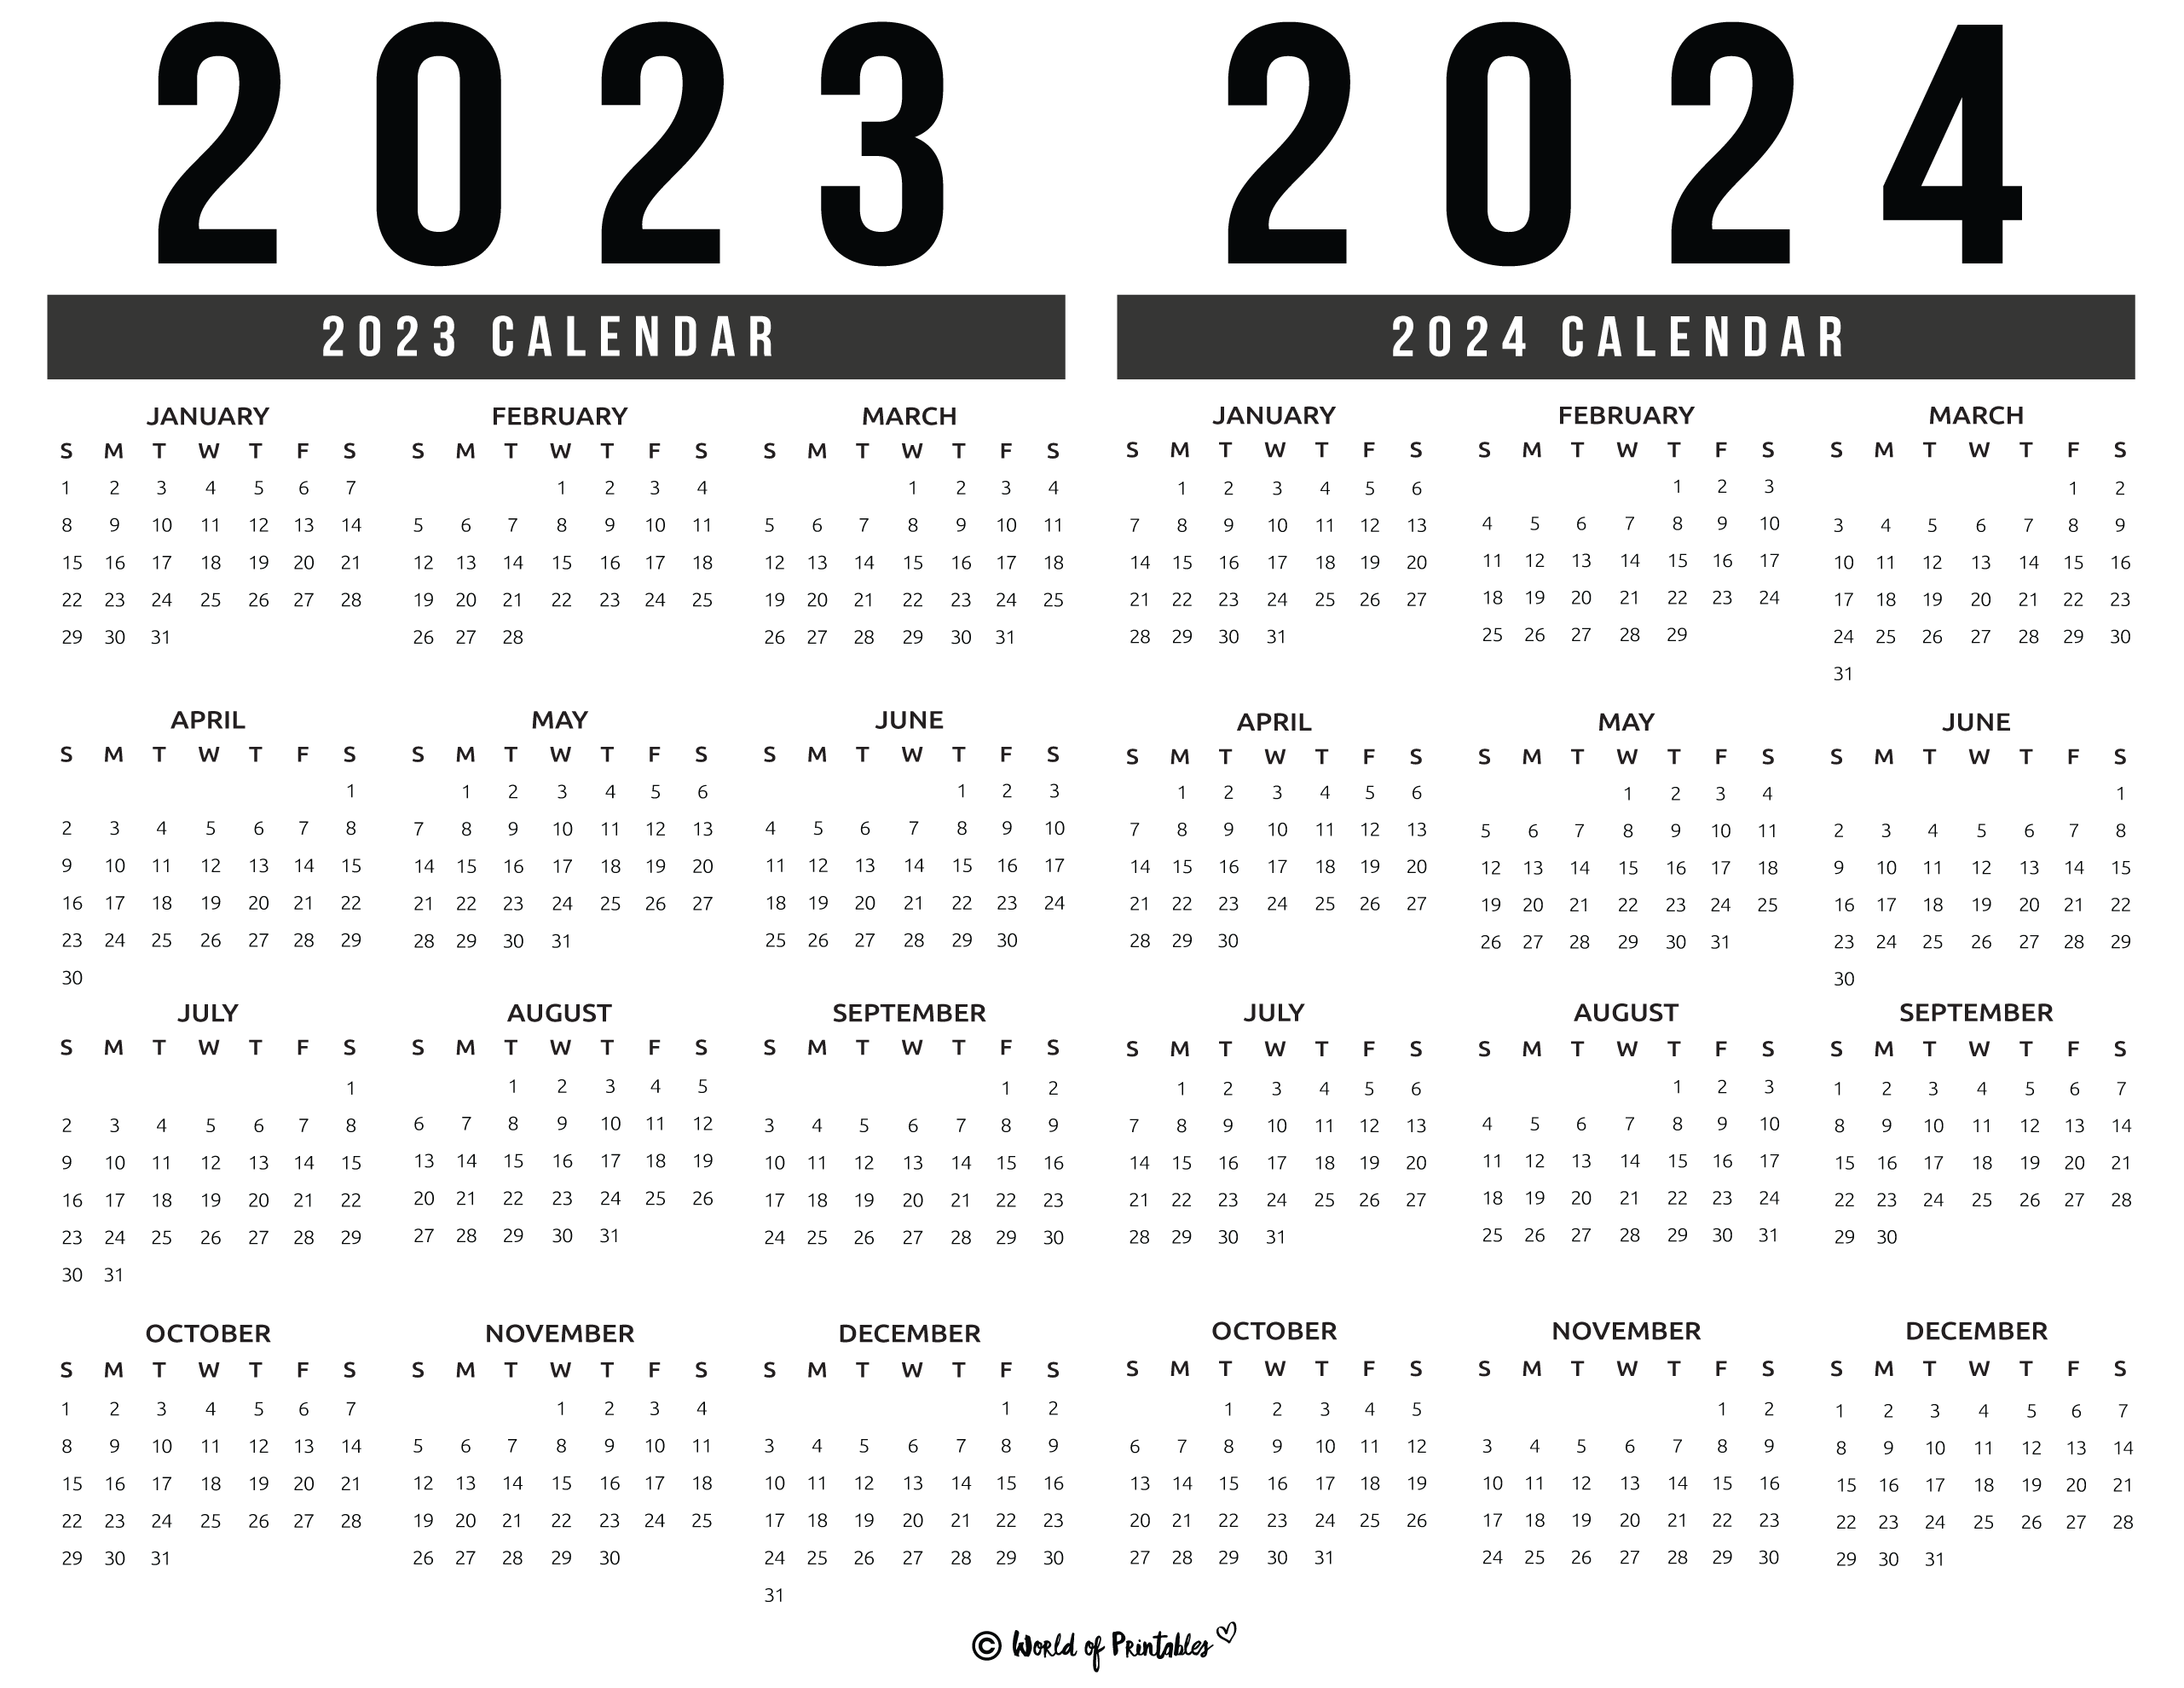 2023 2024 Calendar Free Printables - World Of Printables for 2023 Calendar 2024 Printable Free